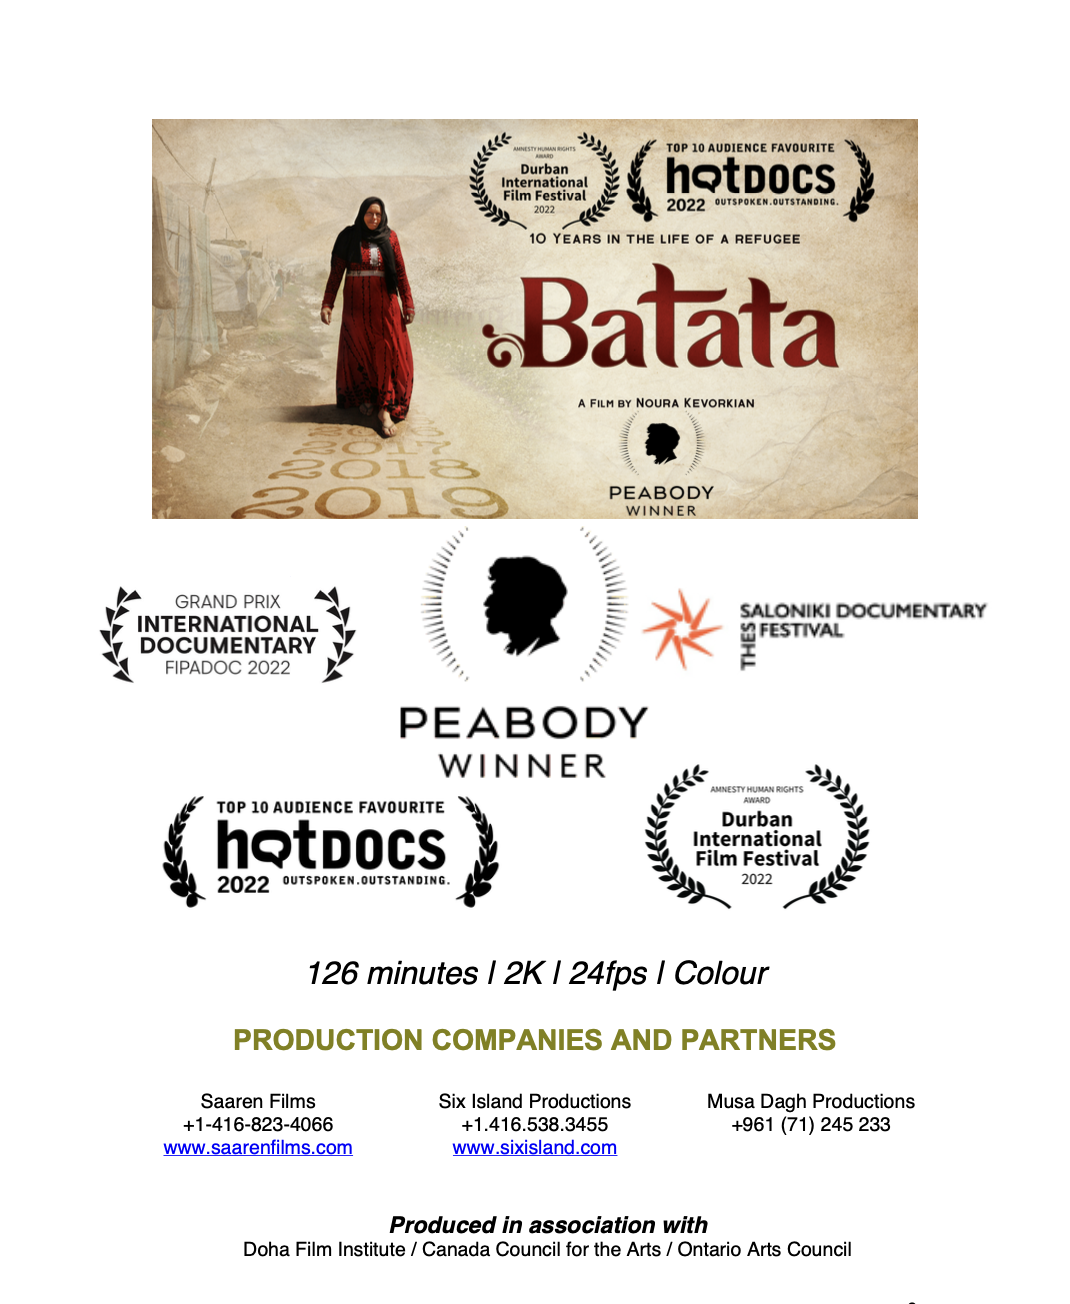 Batata Awards